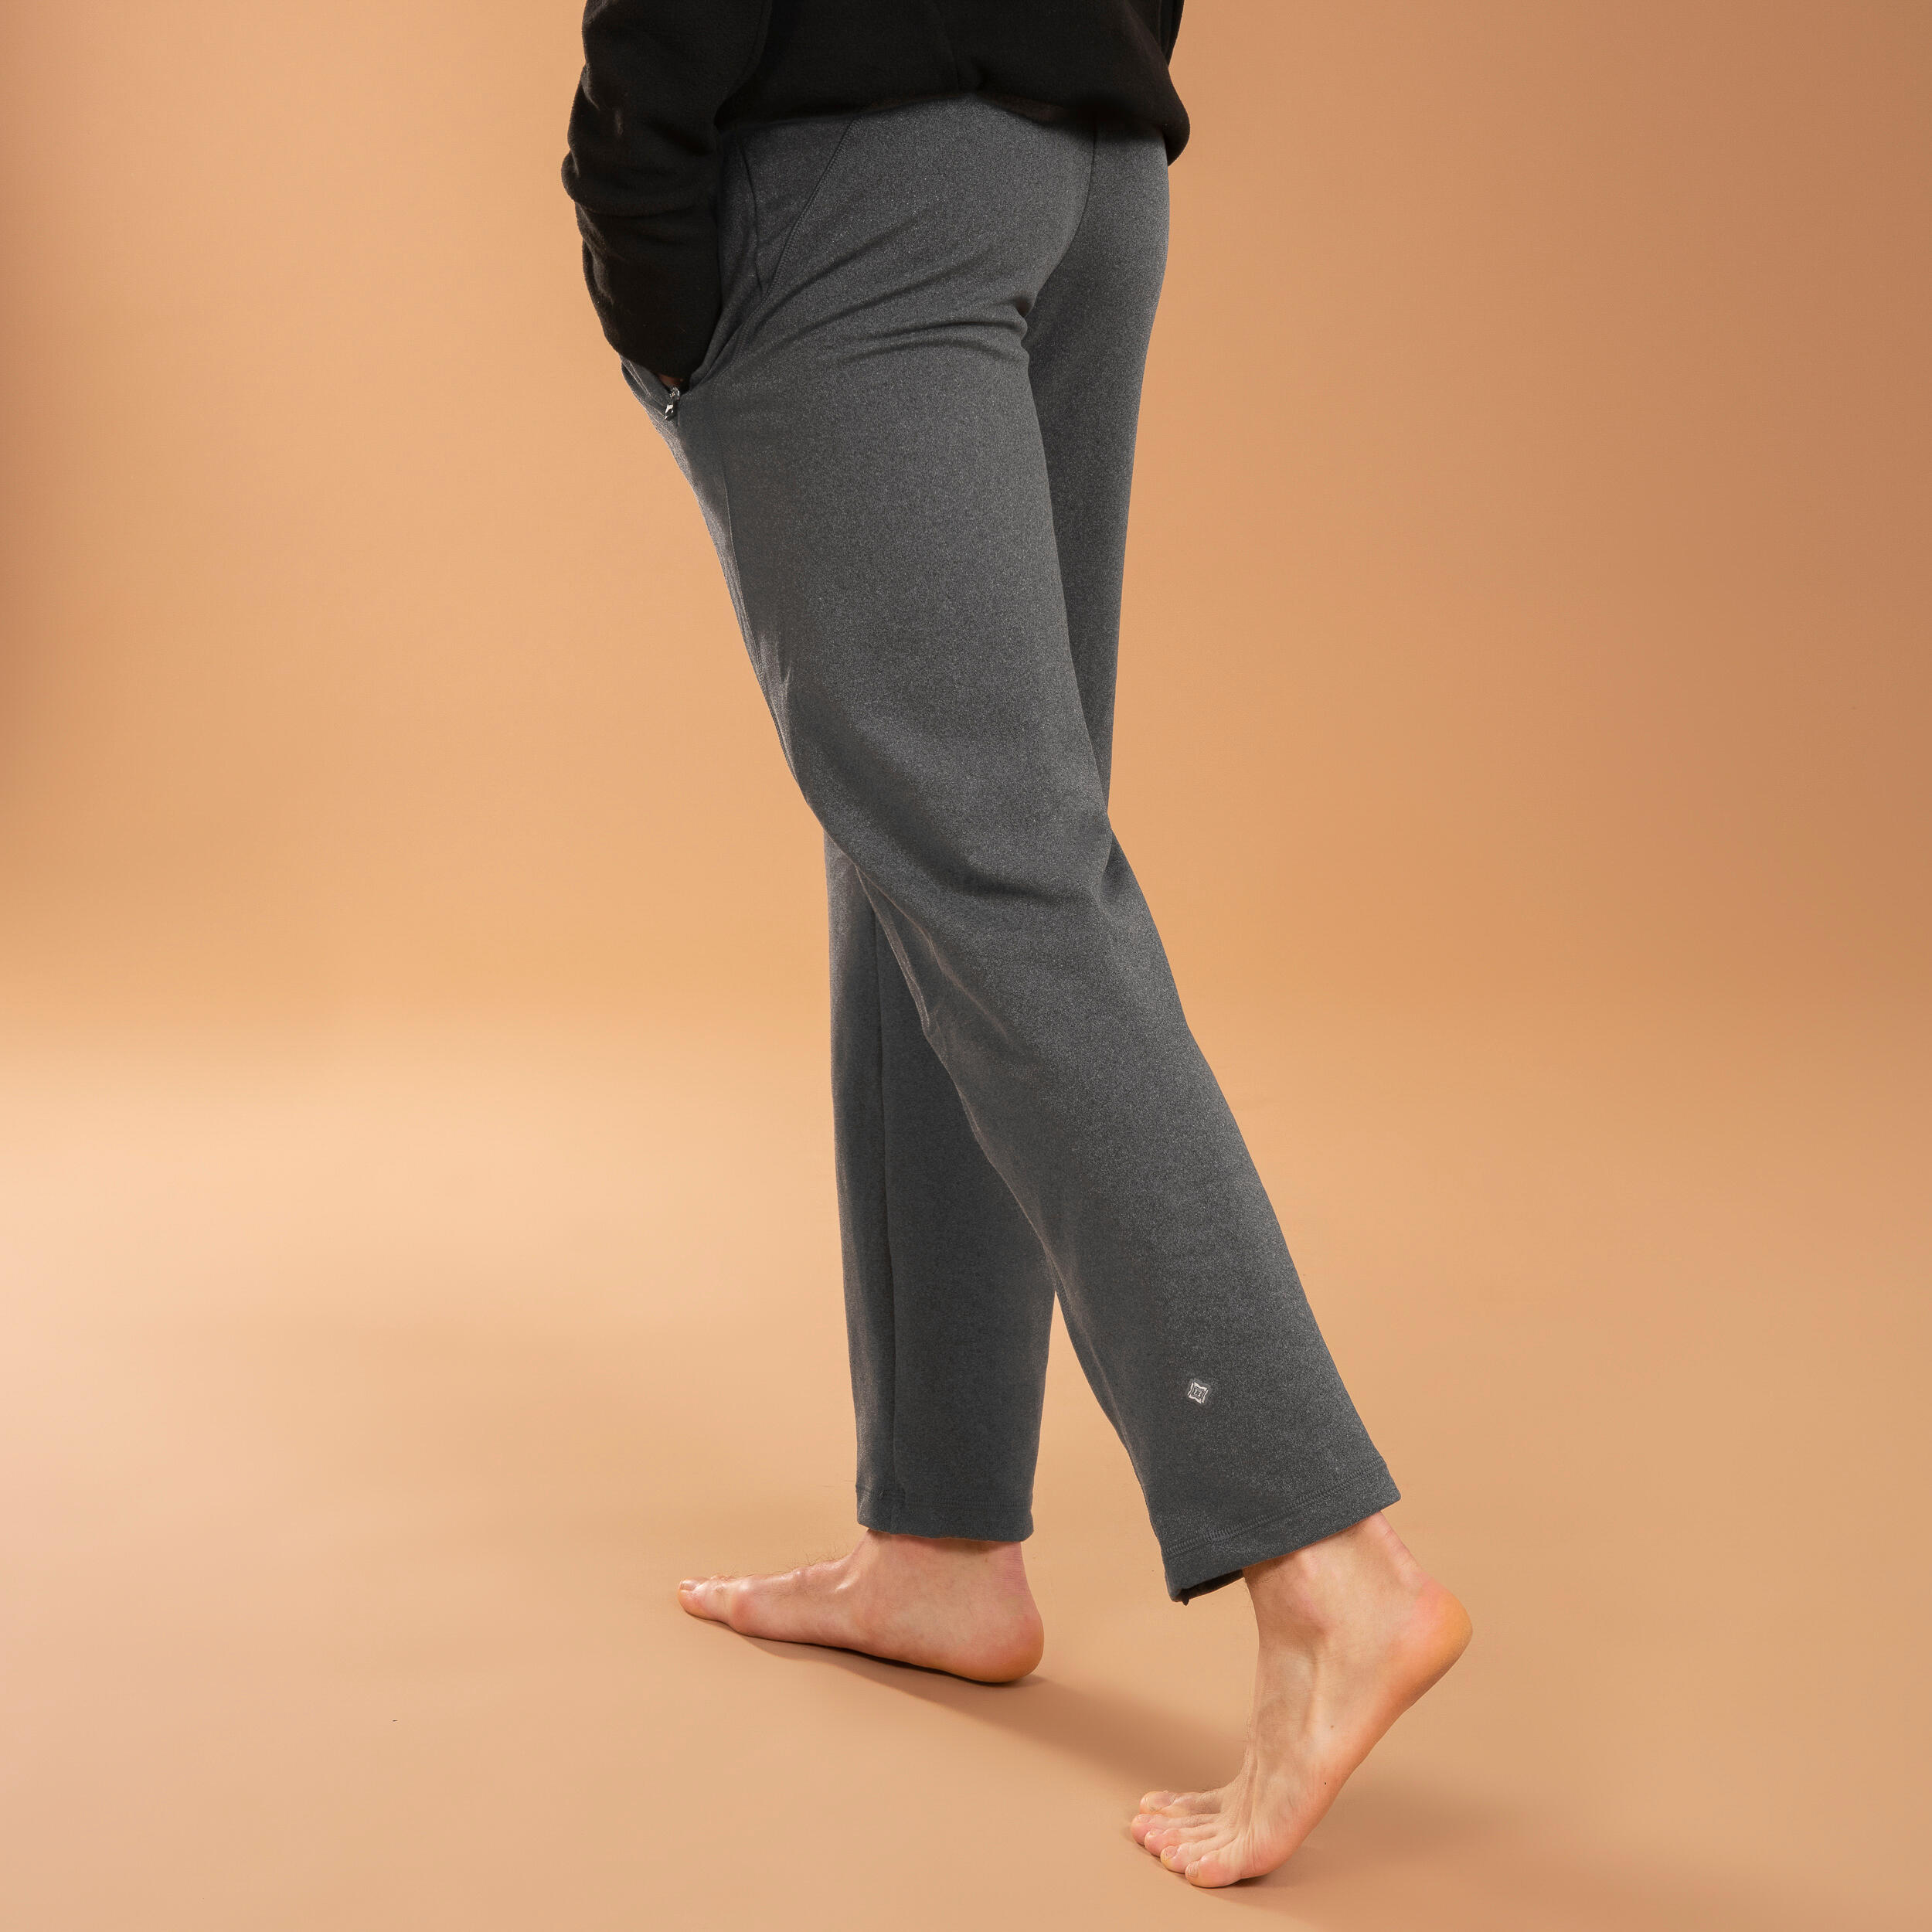 Women's High-Waisted Yoga Pants - Black, Dark grey - Kimjaly - Decathlon